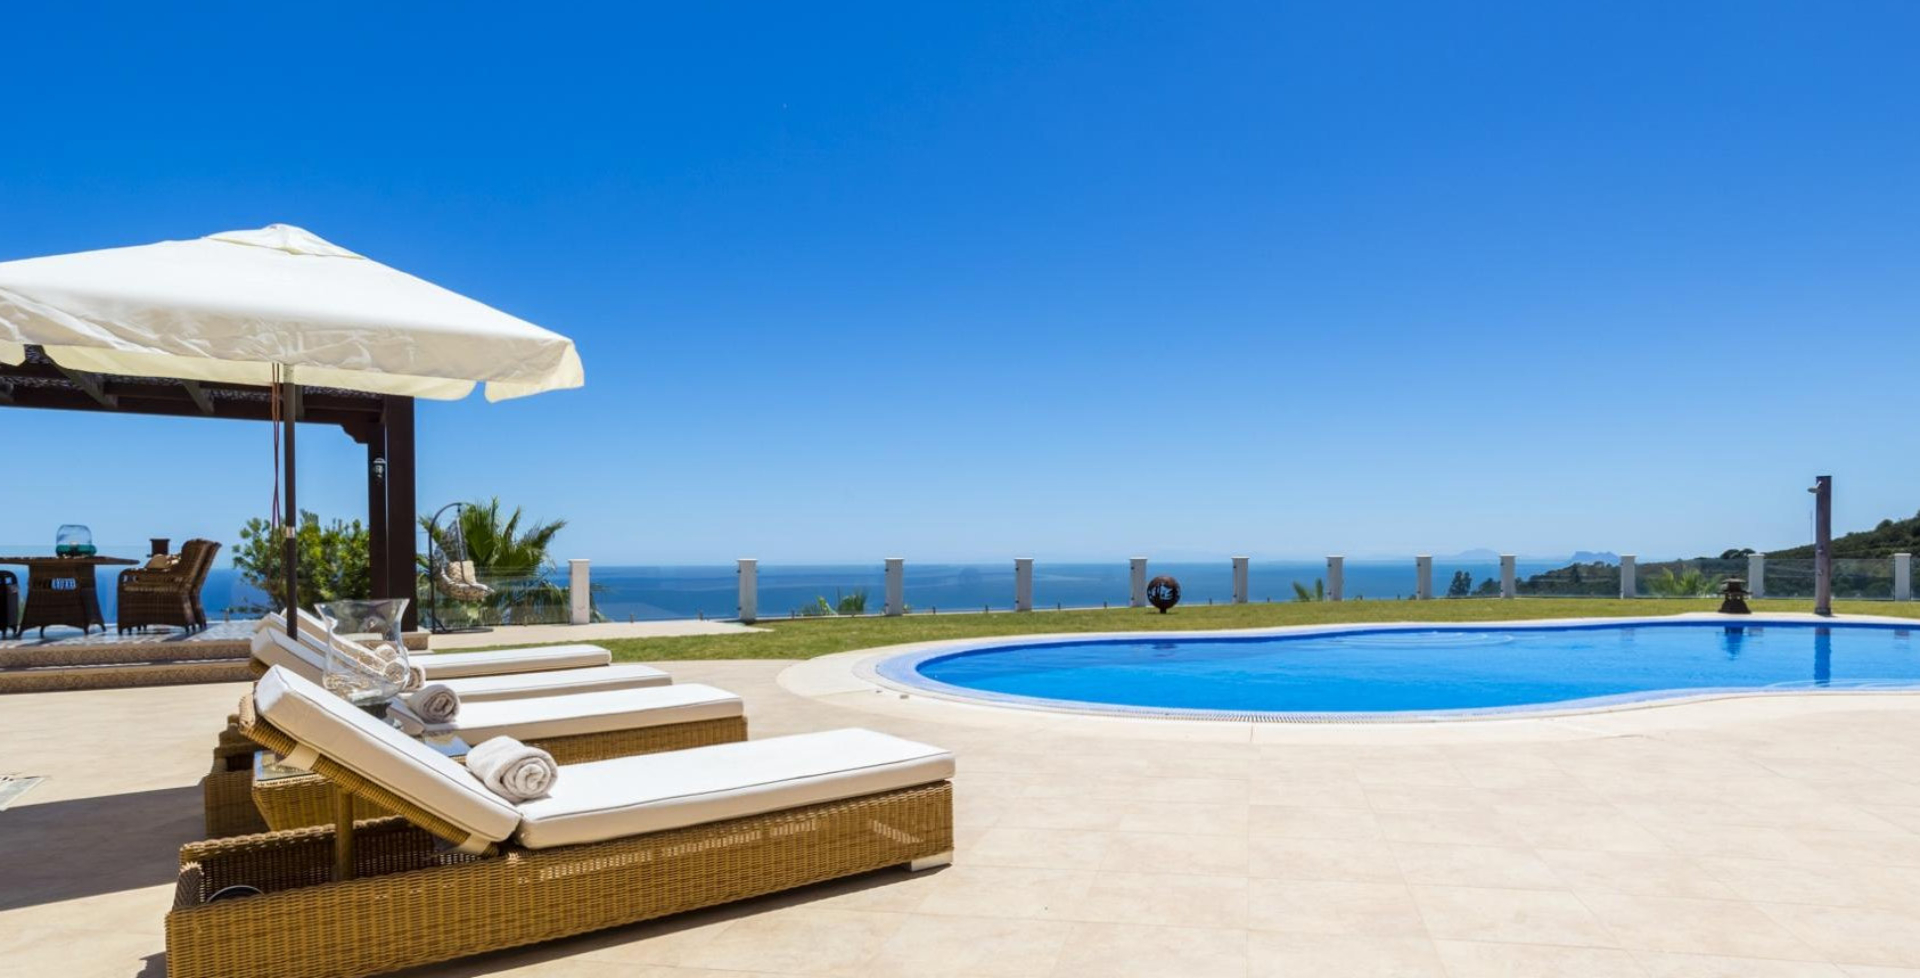 Villa Vista 4 bed – poolside loungers